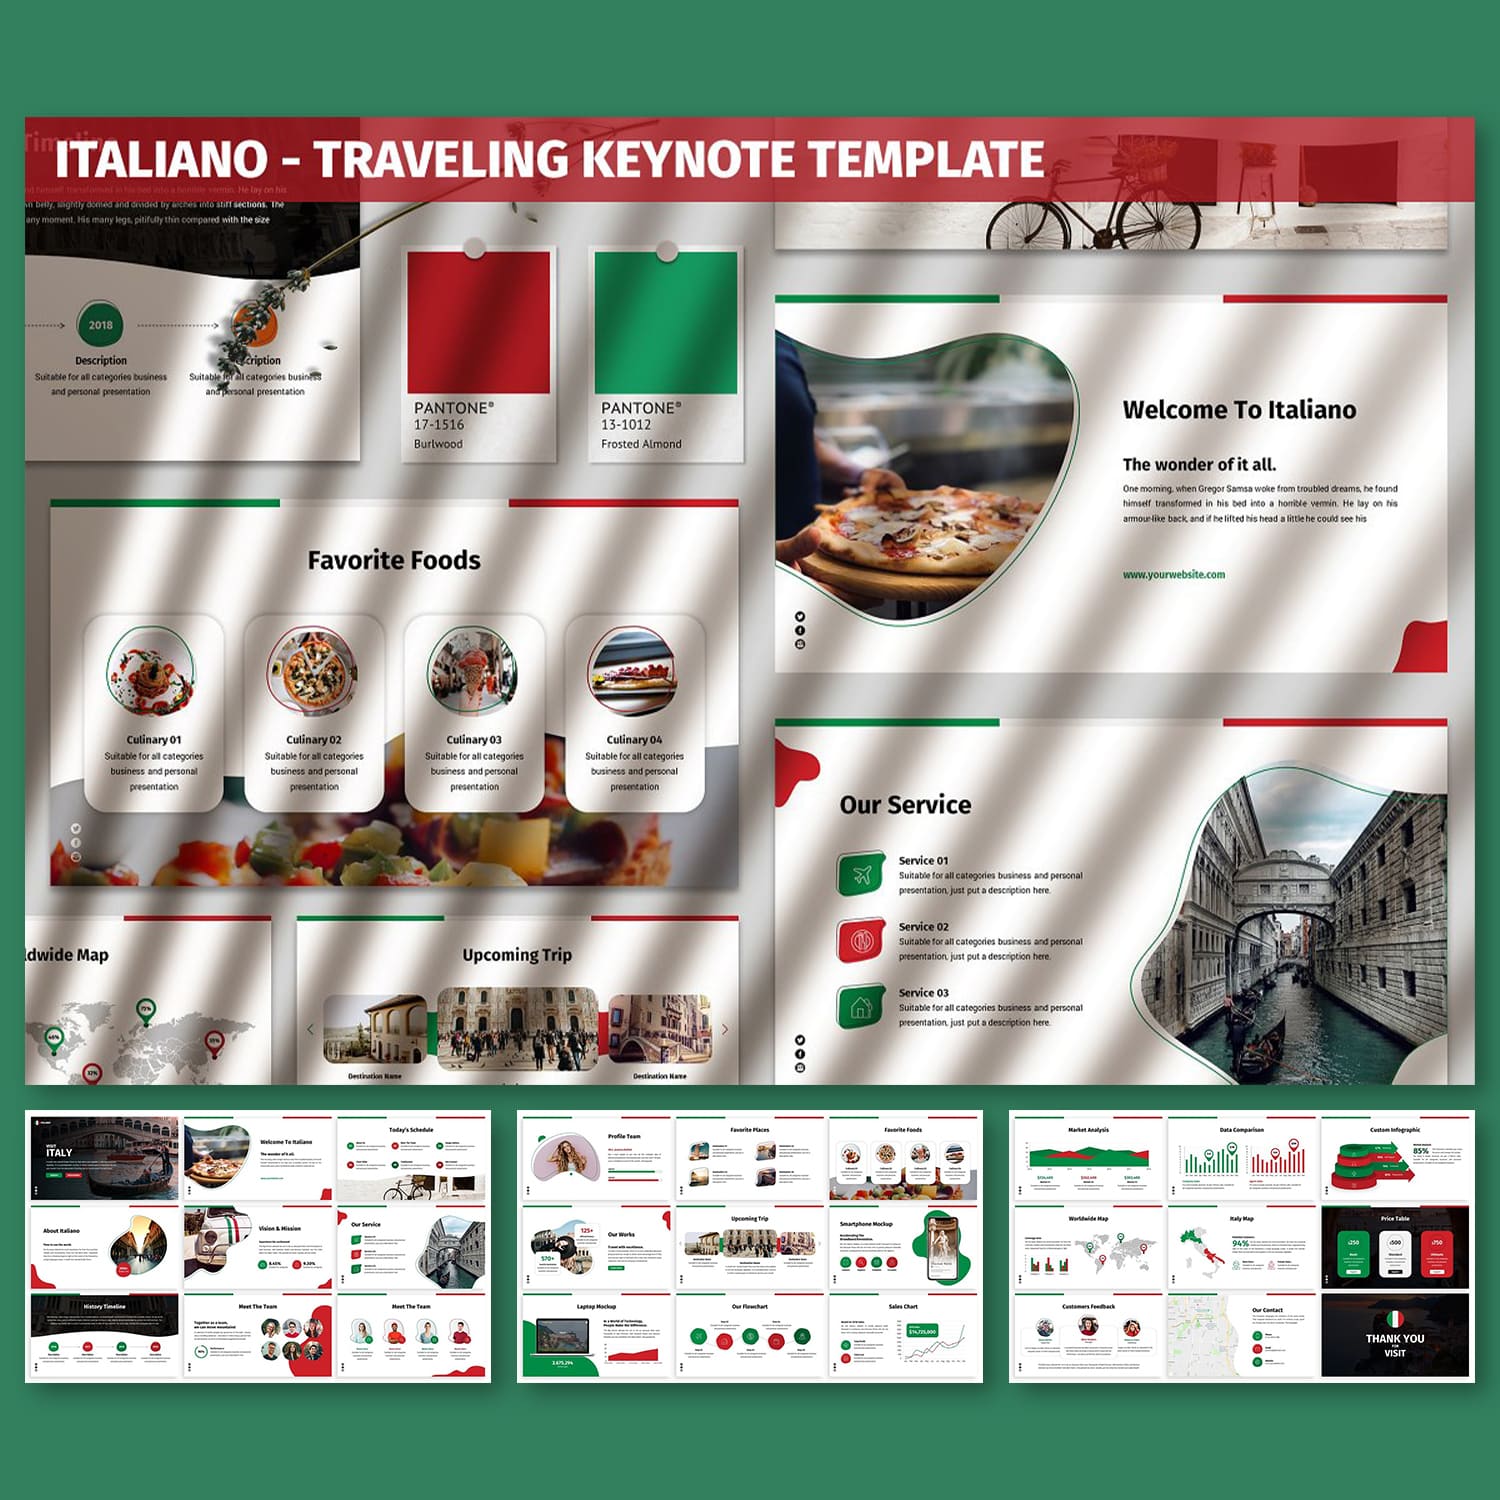 Italiano - Traveling Keynote Template main cover.